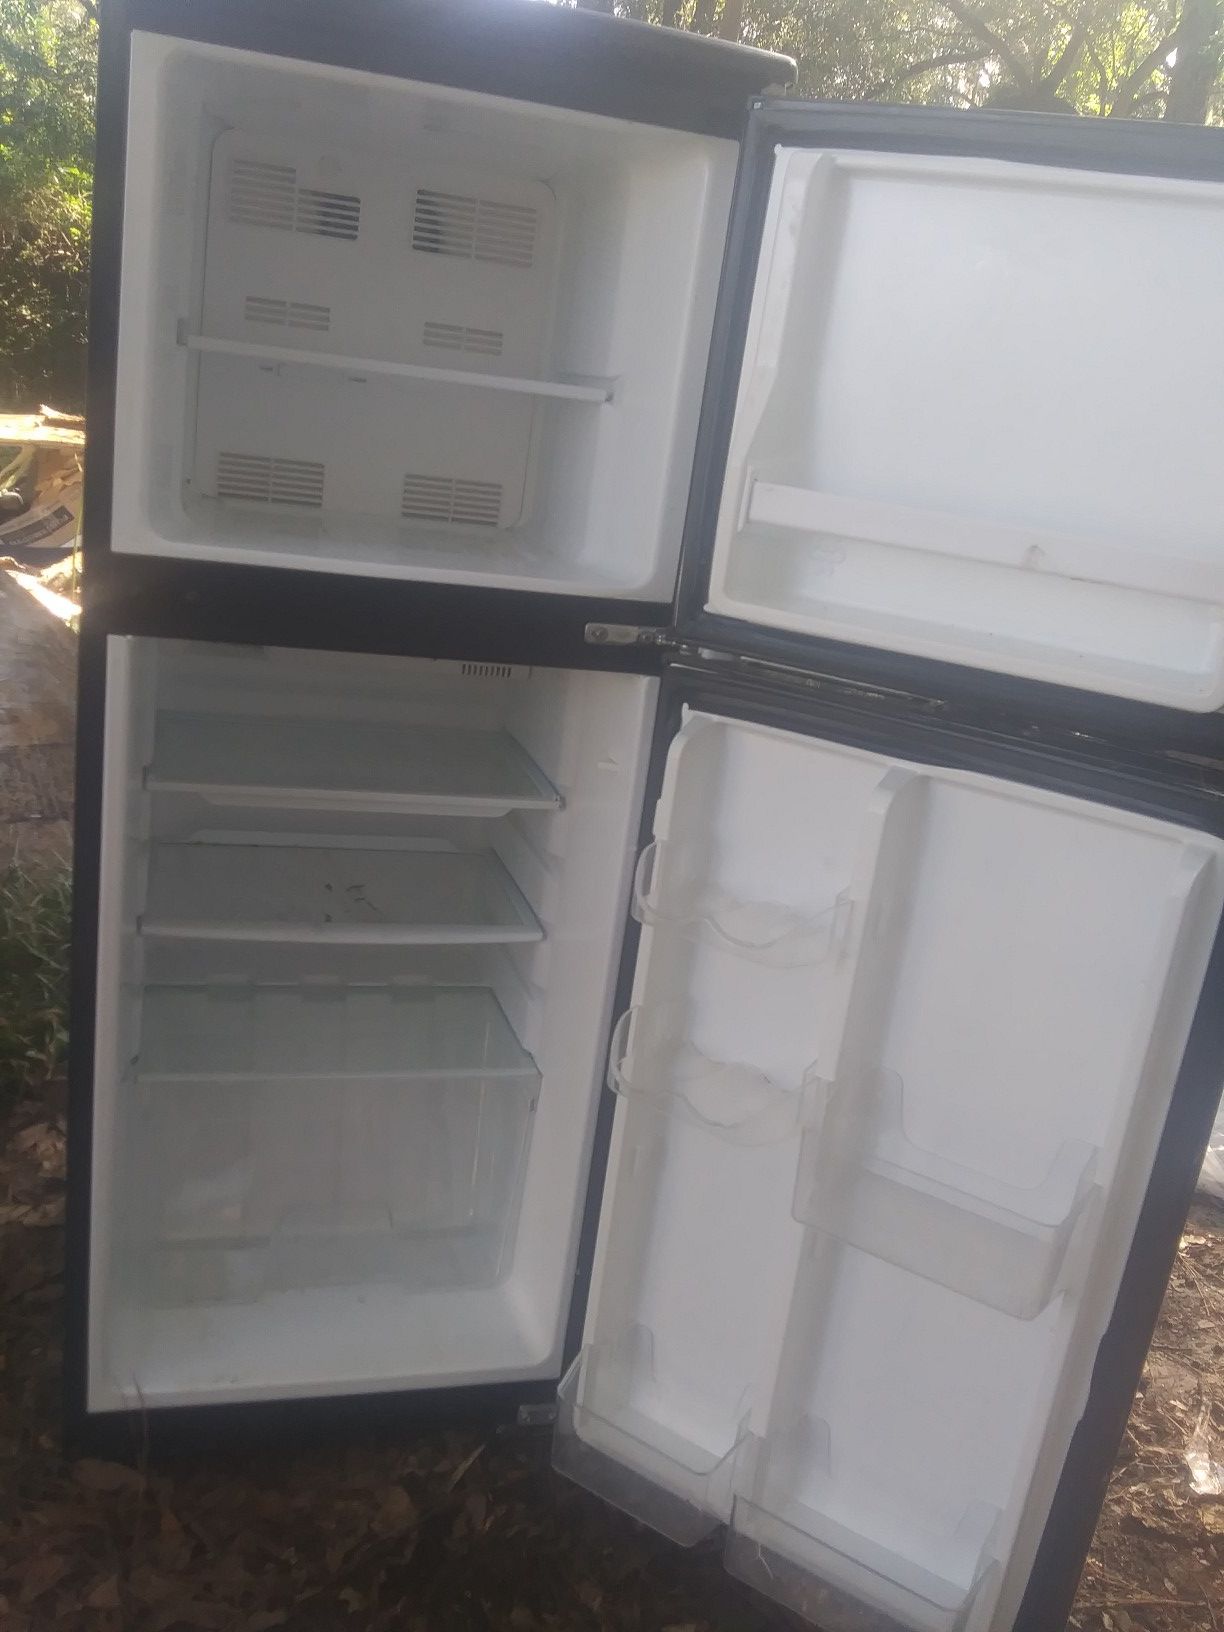 3/4 RV fridge/freezer